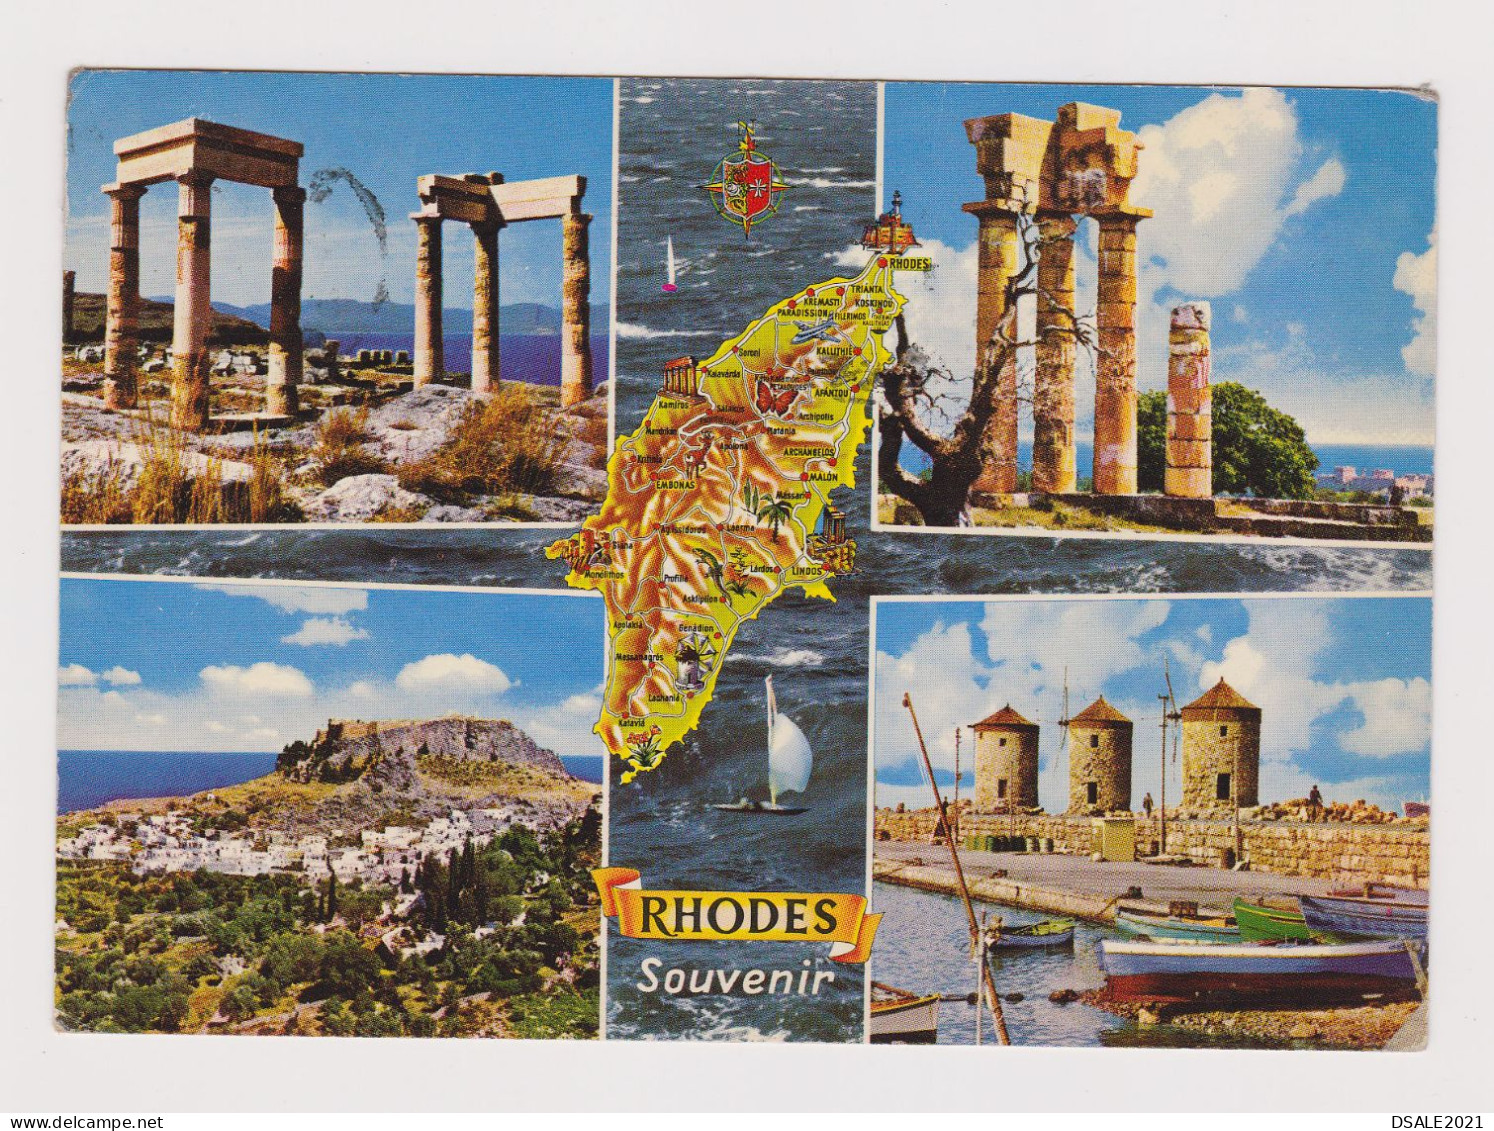 Greece Mi#1148 3Dr. EUROPA CEPT Topic Stamp, 1970s Rhodes View Photo Postcard RPPc Sent Abroad To Bulgaria (67337) - 1973